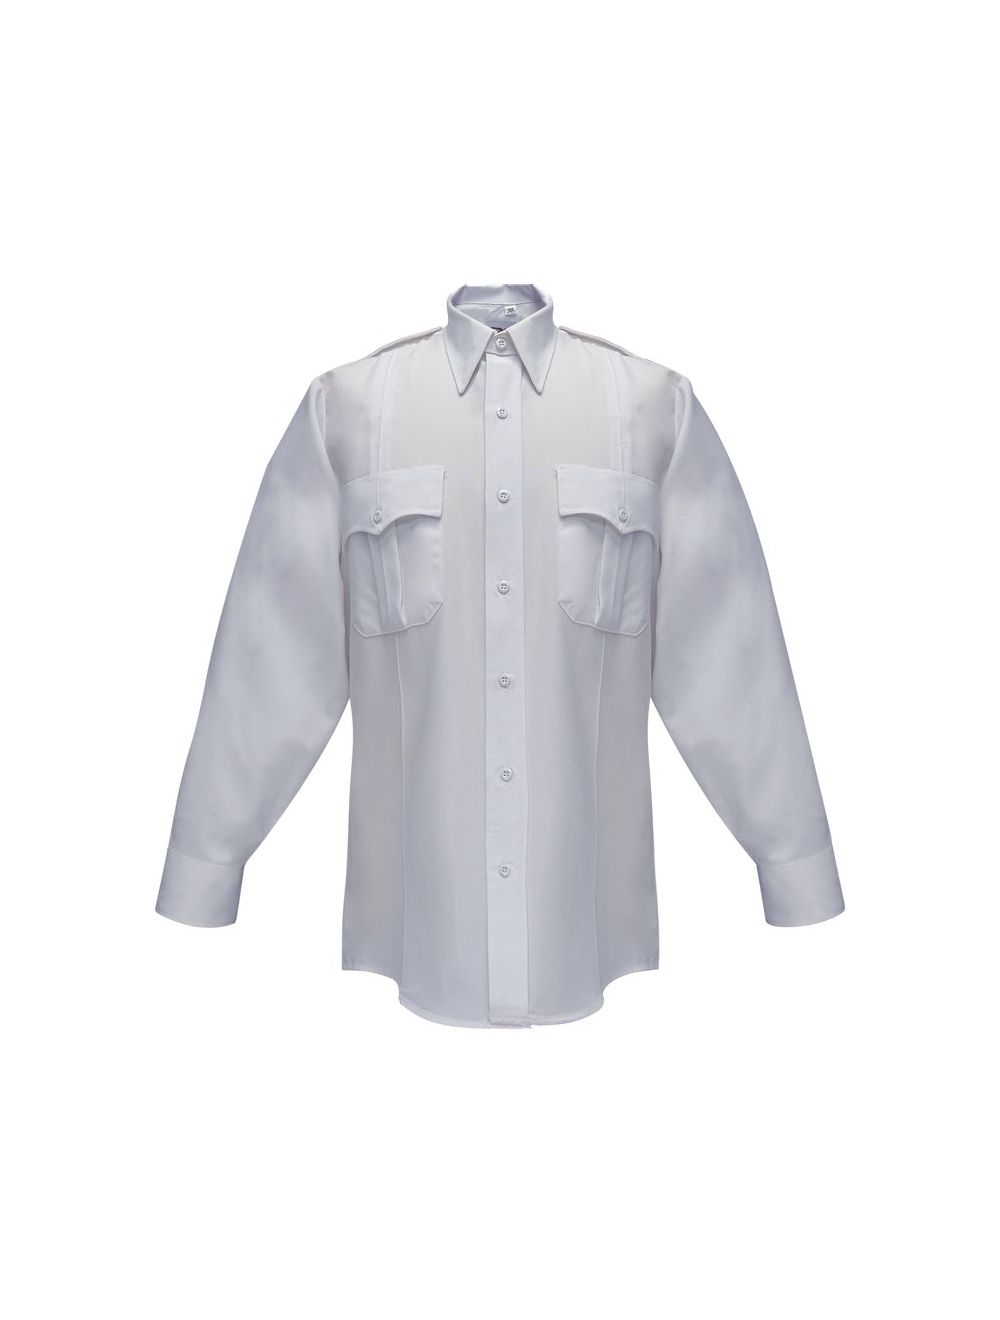 Flying Cross Command Long Sleeve Shirt with Zipper & Convertible Sport Collar - White, 16.5 x 32-33